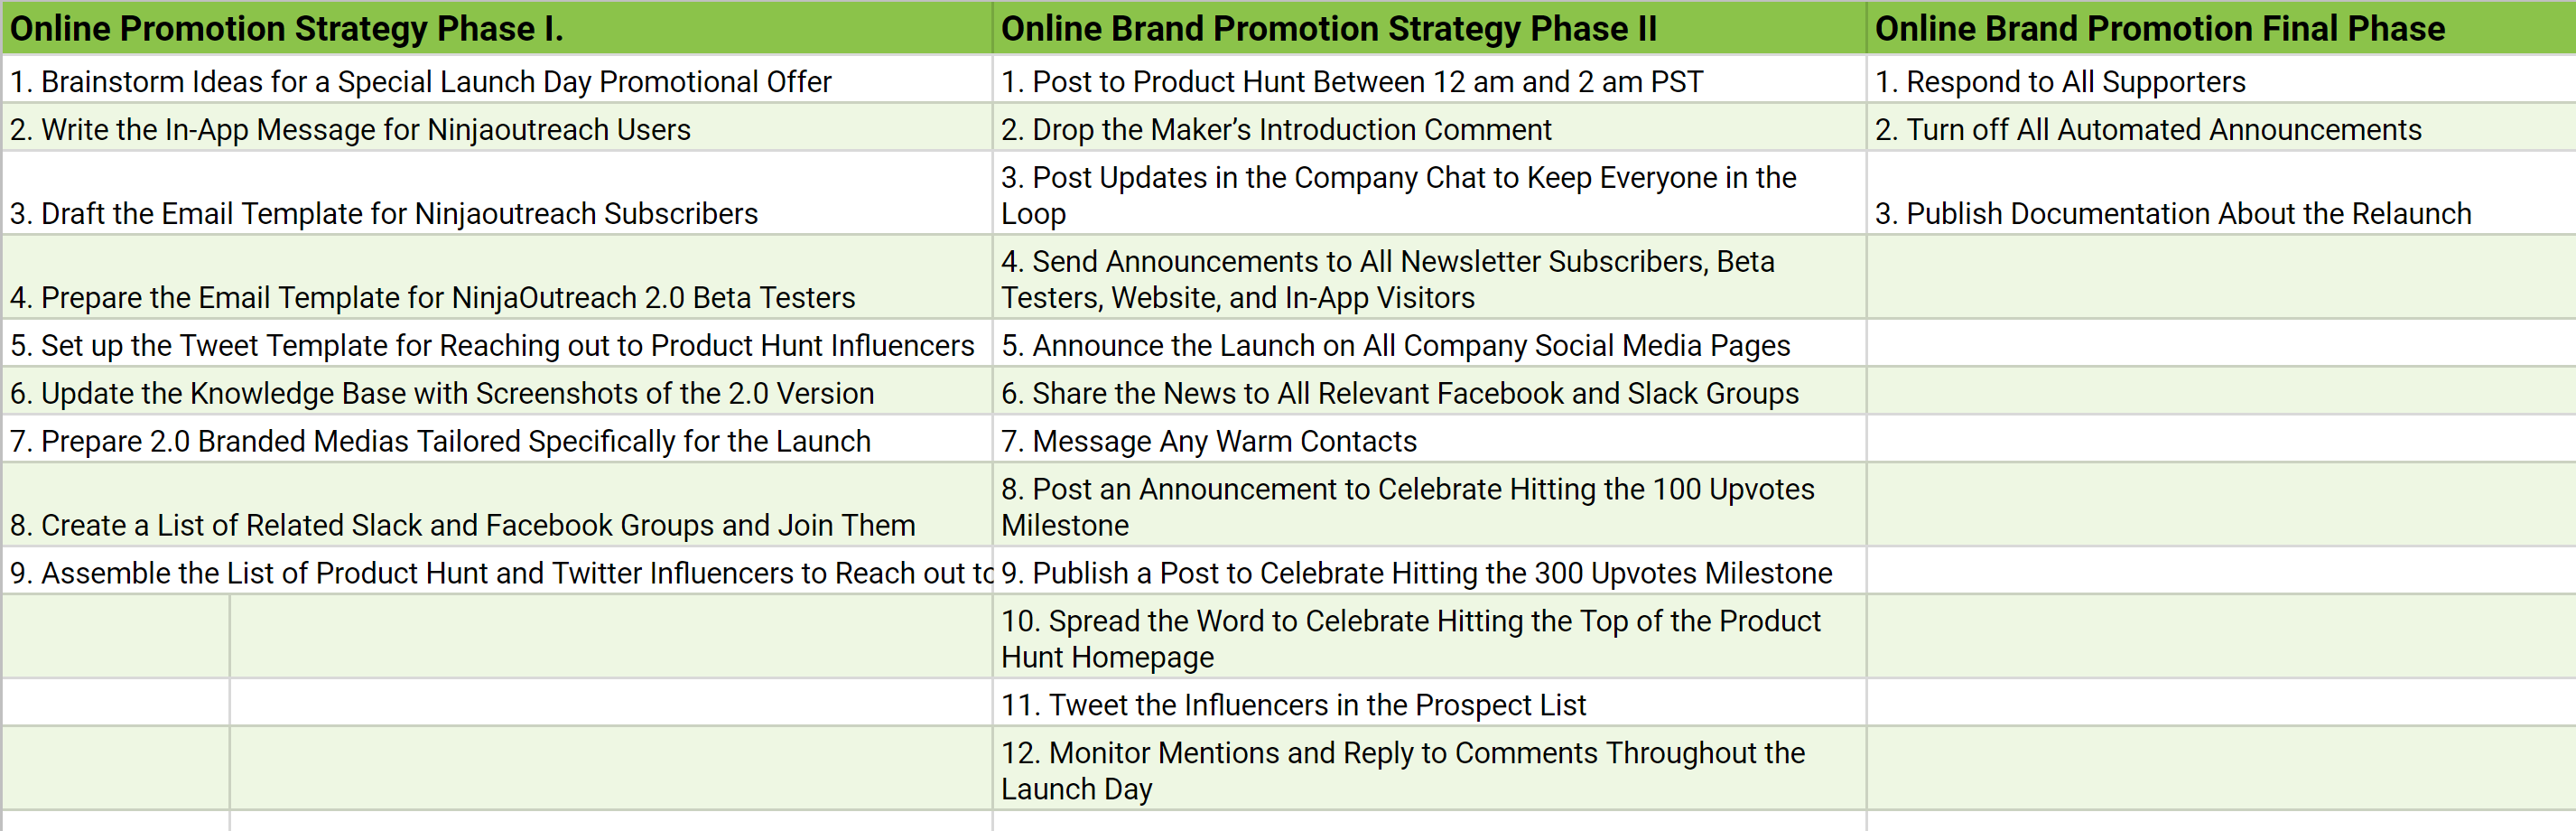 Online Brand Promotion Steps NinjaOutreach